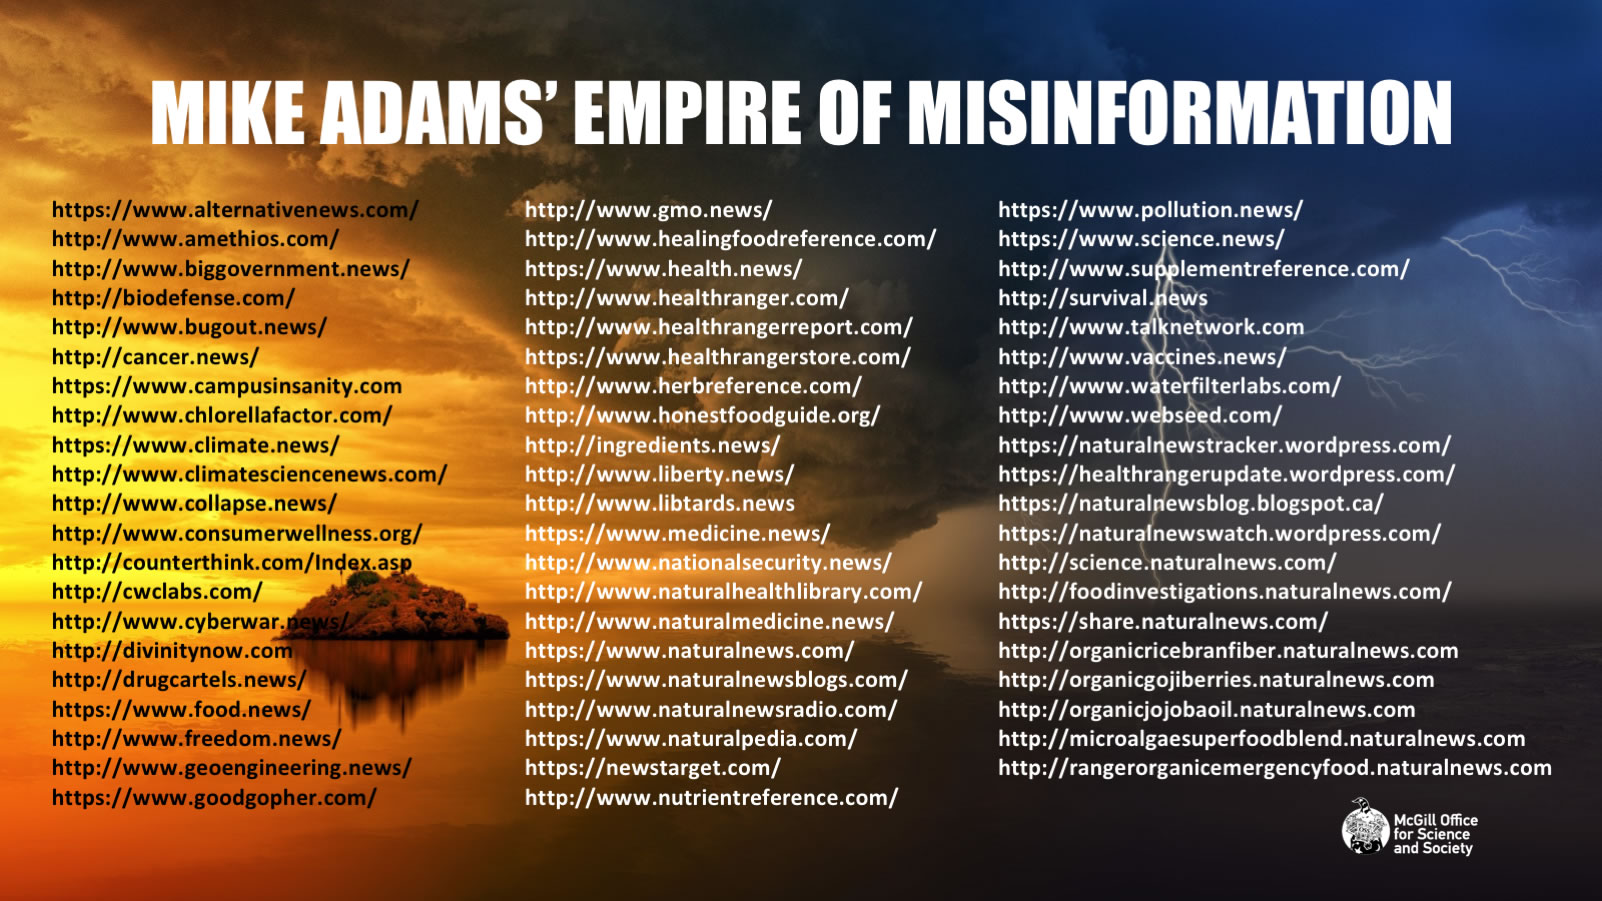 Mike Adams' online empire